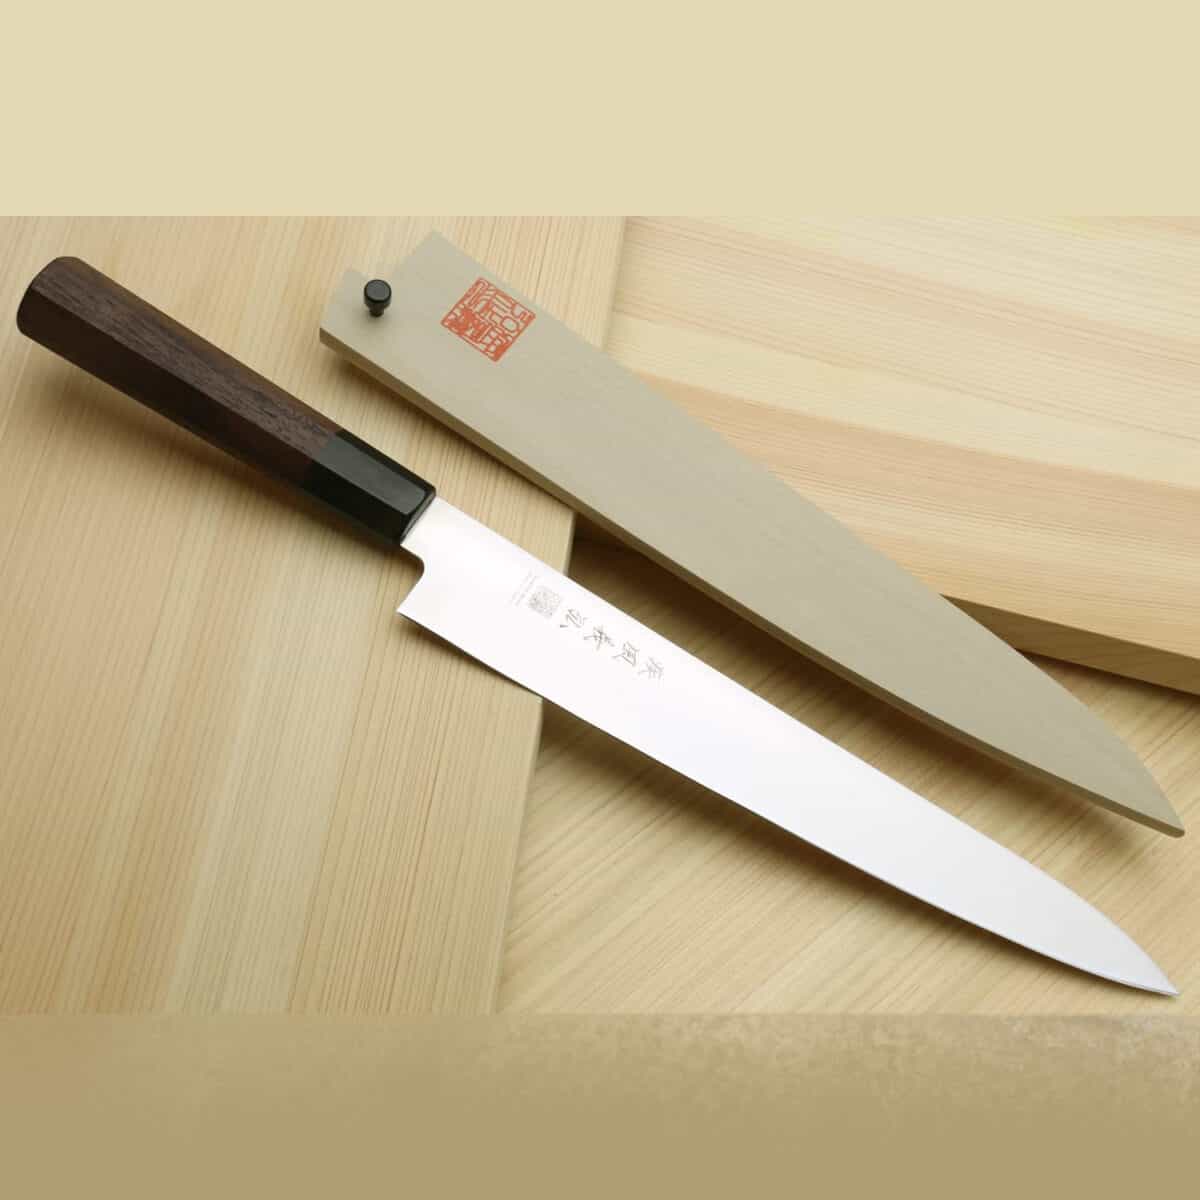 What is a sujihiki knife